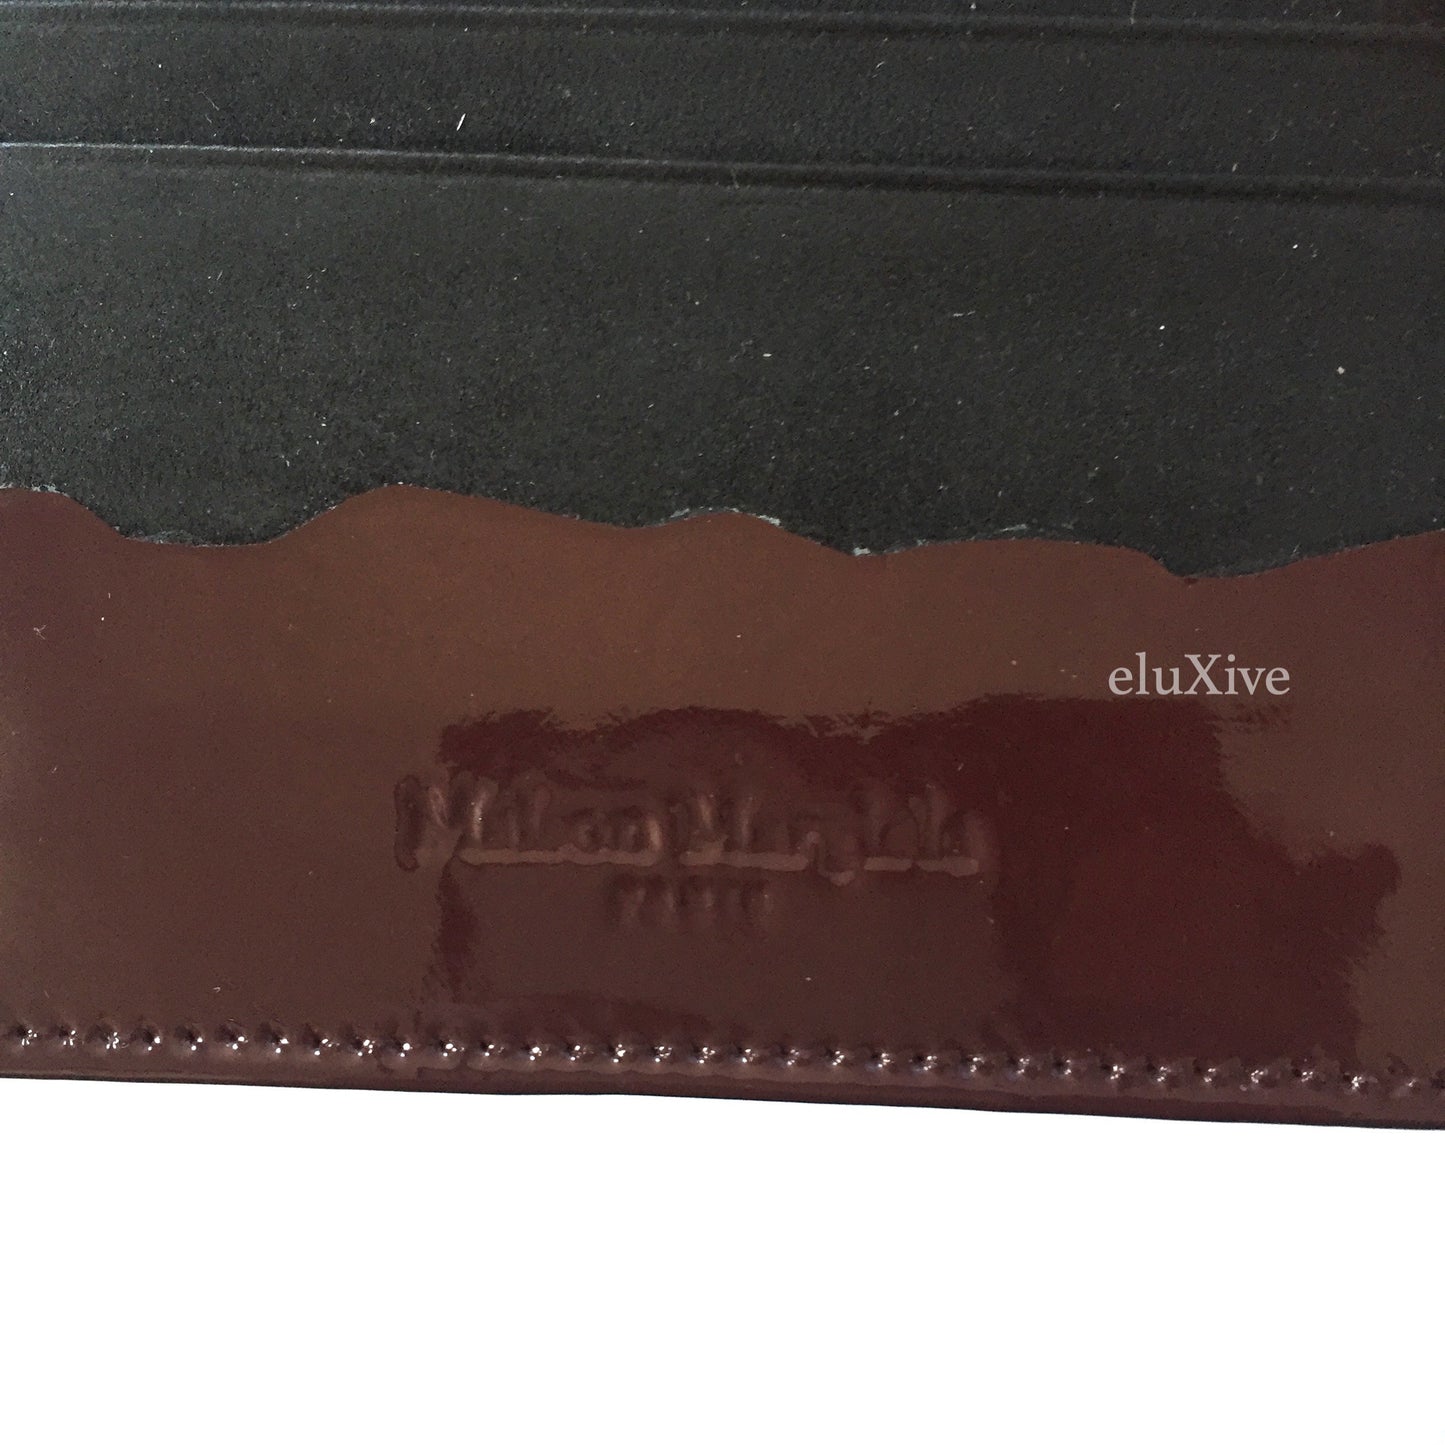 Maison Margiela - Dipped Leather Card Case